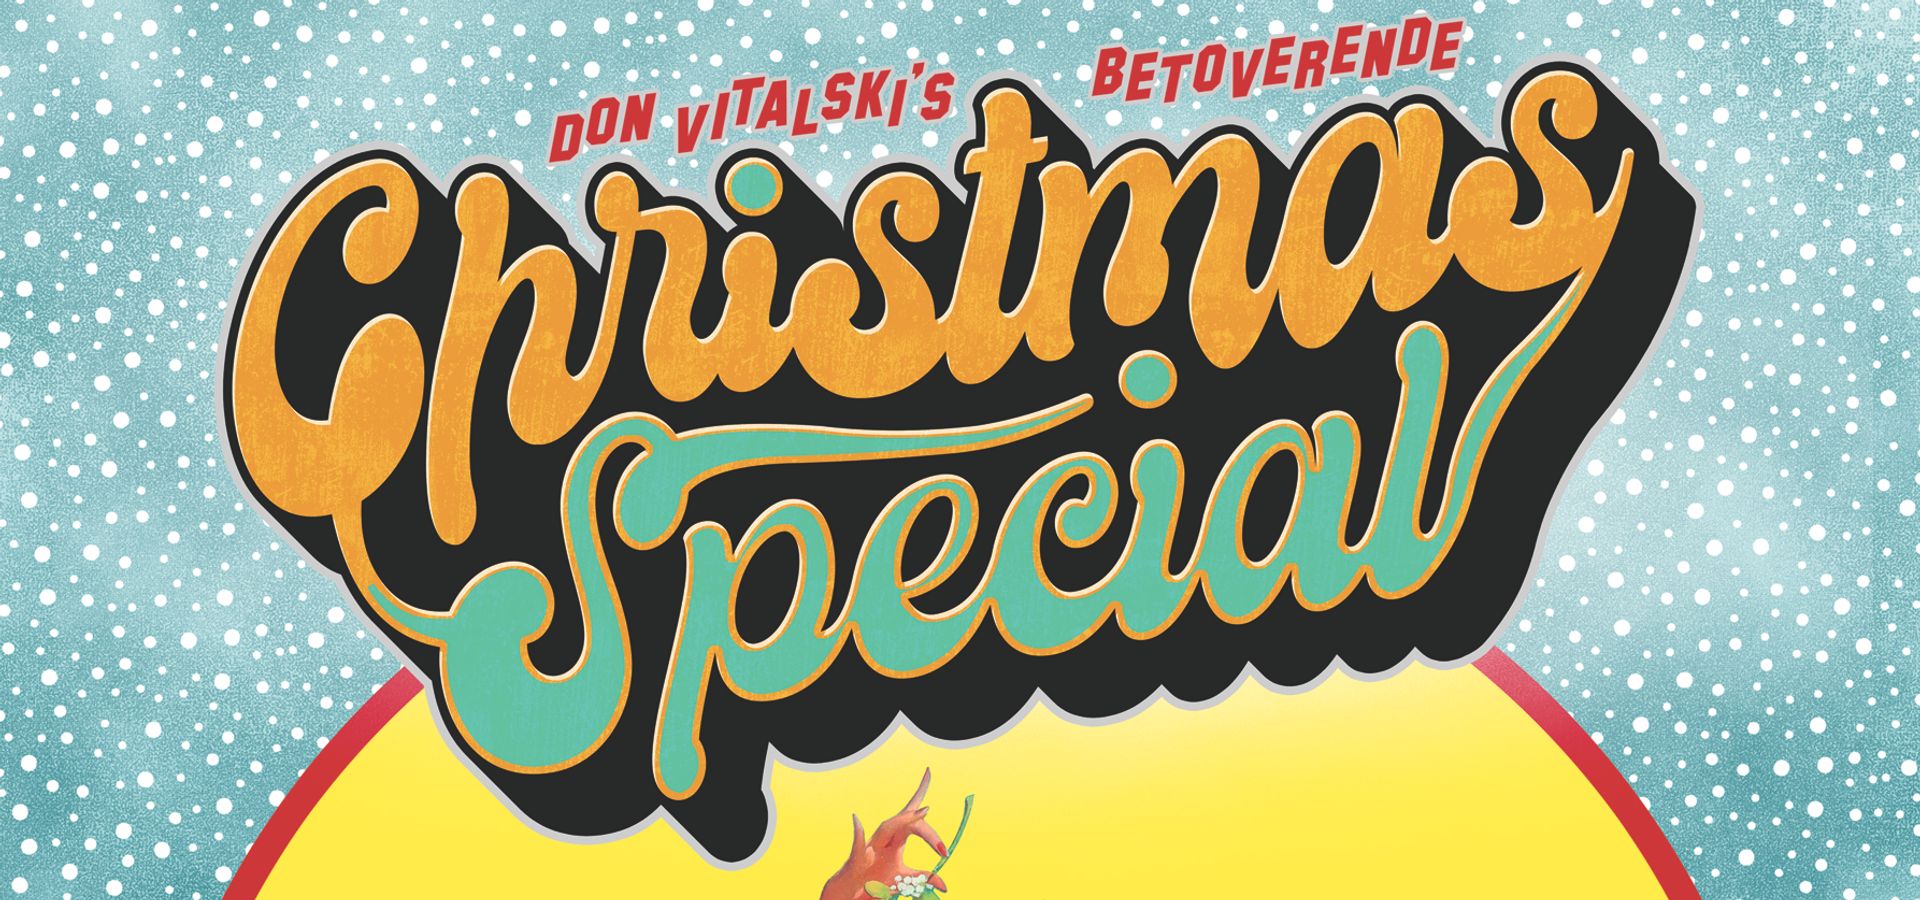  Don Vitalski's Christmas Special